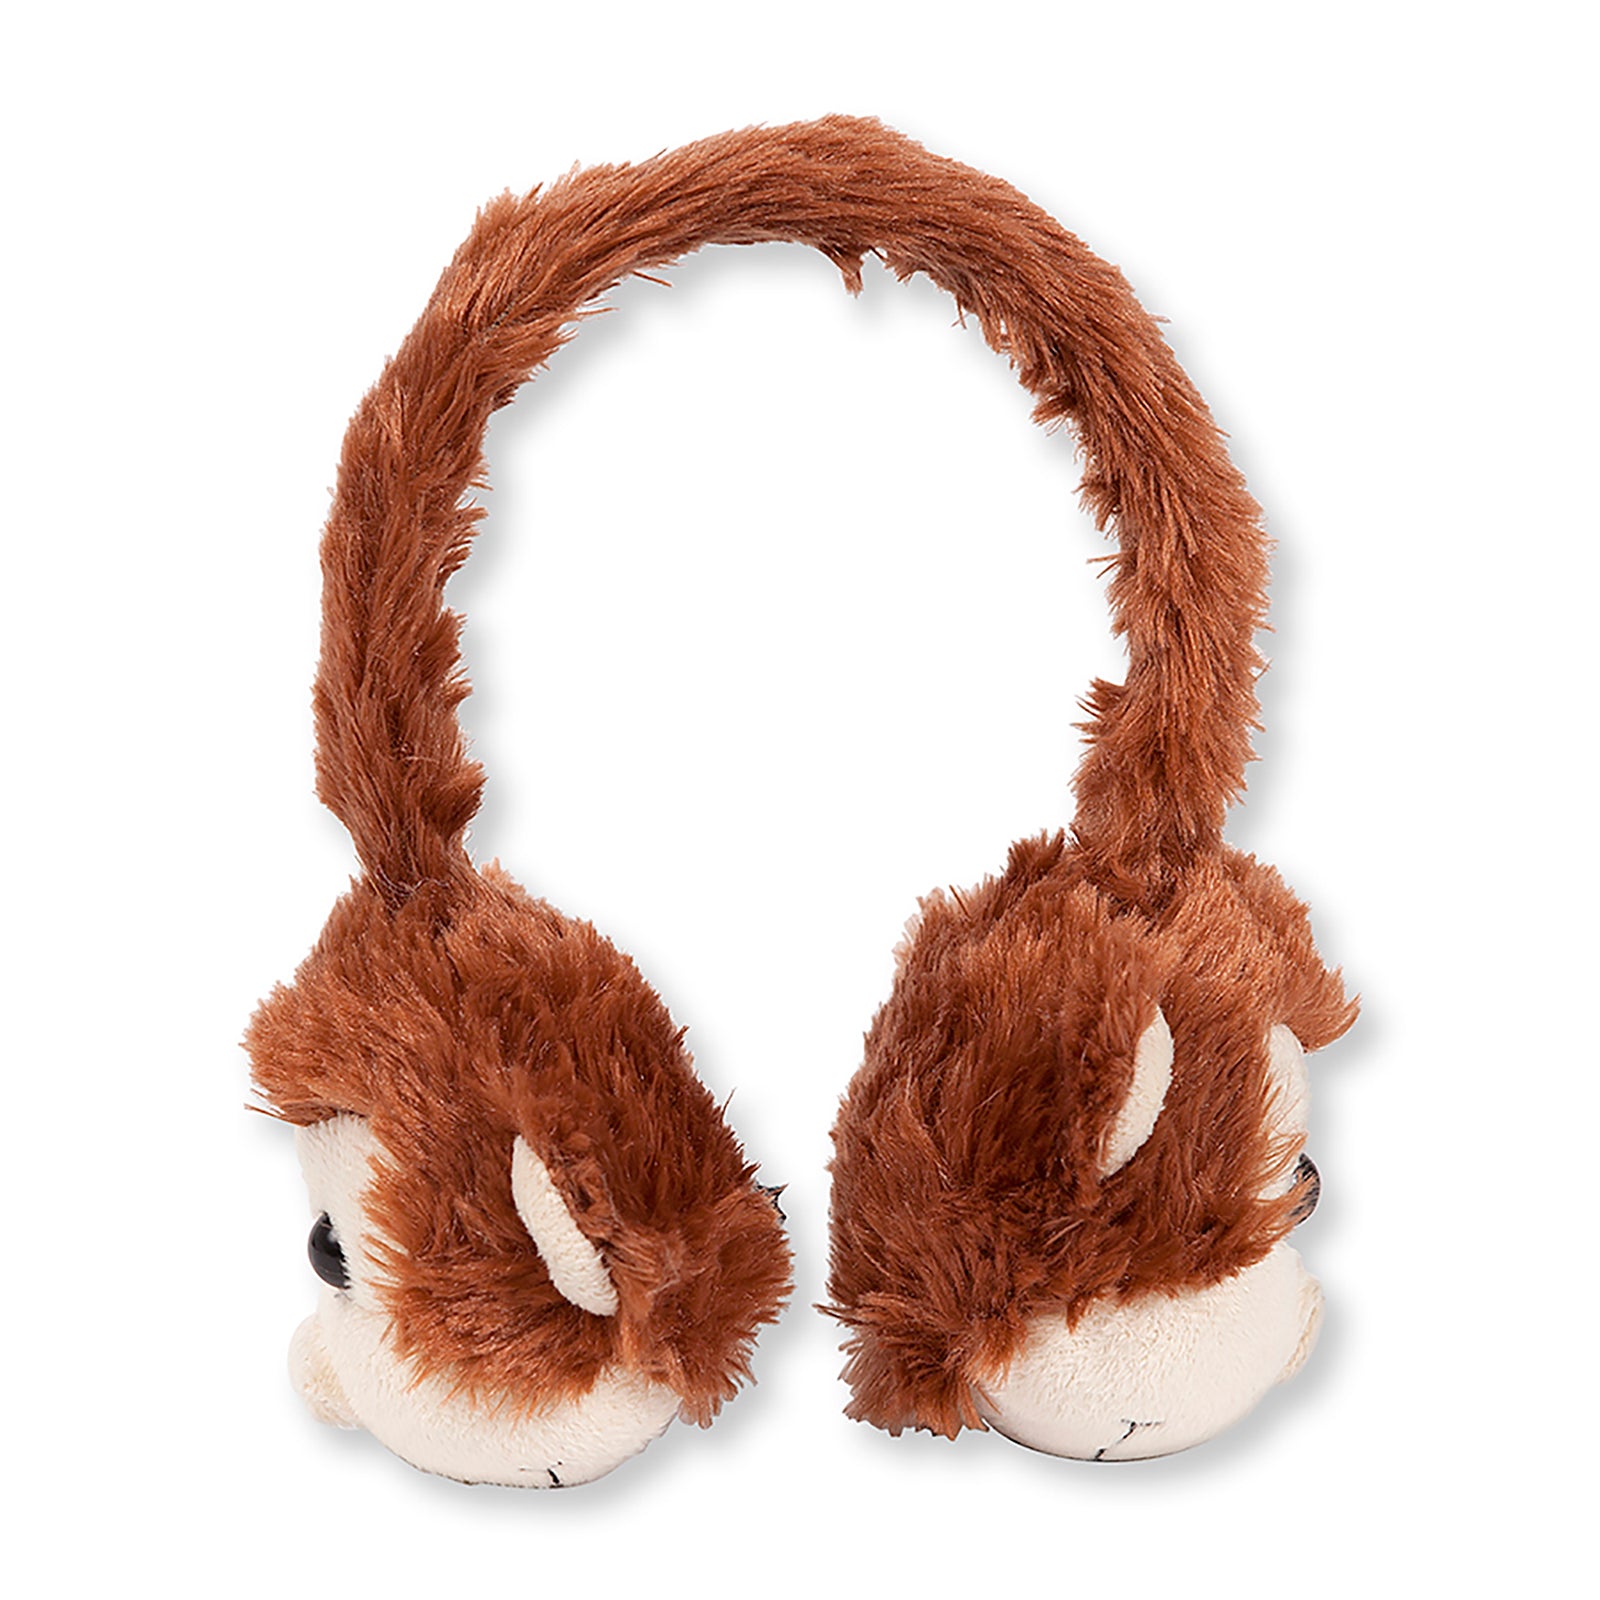 Animalz Ear Headphones Monkey | Over-Ear Headphones | Retractable Headphone Cable